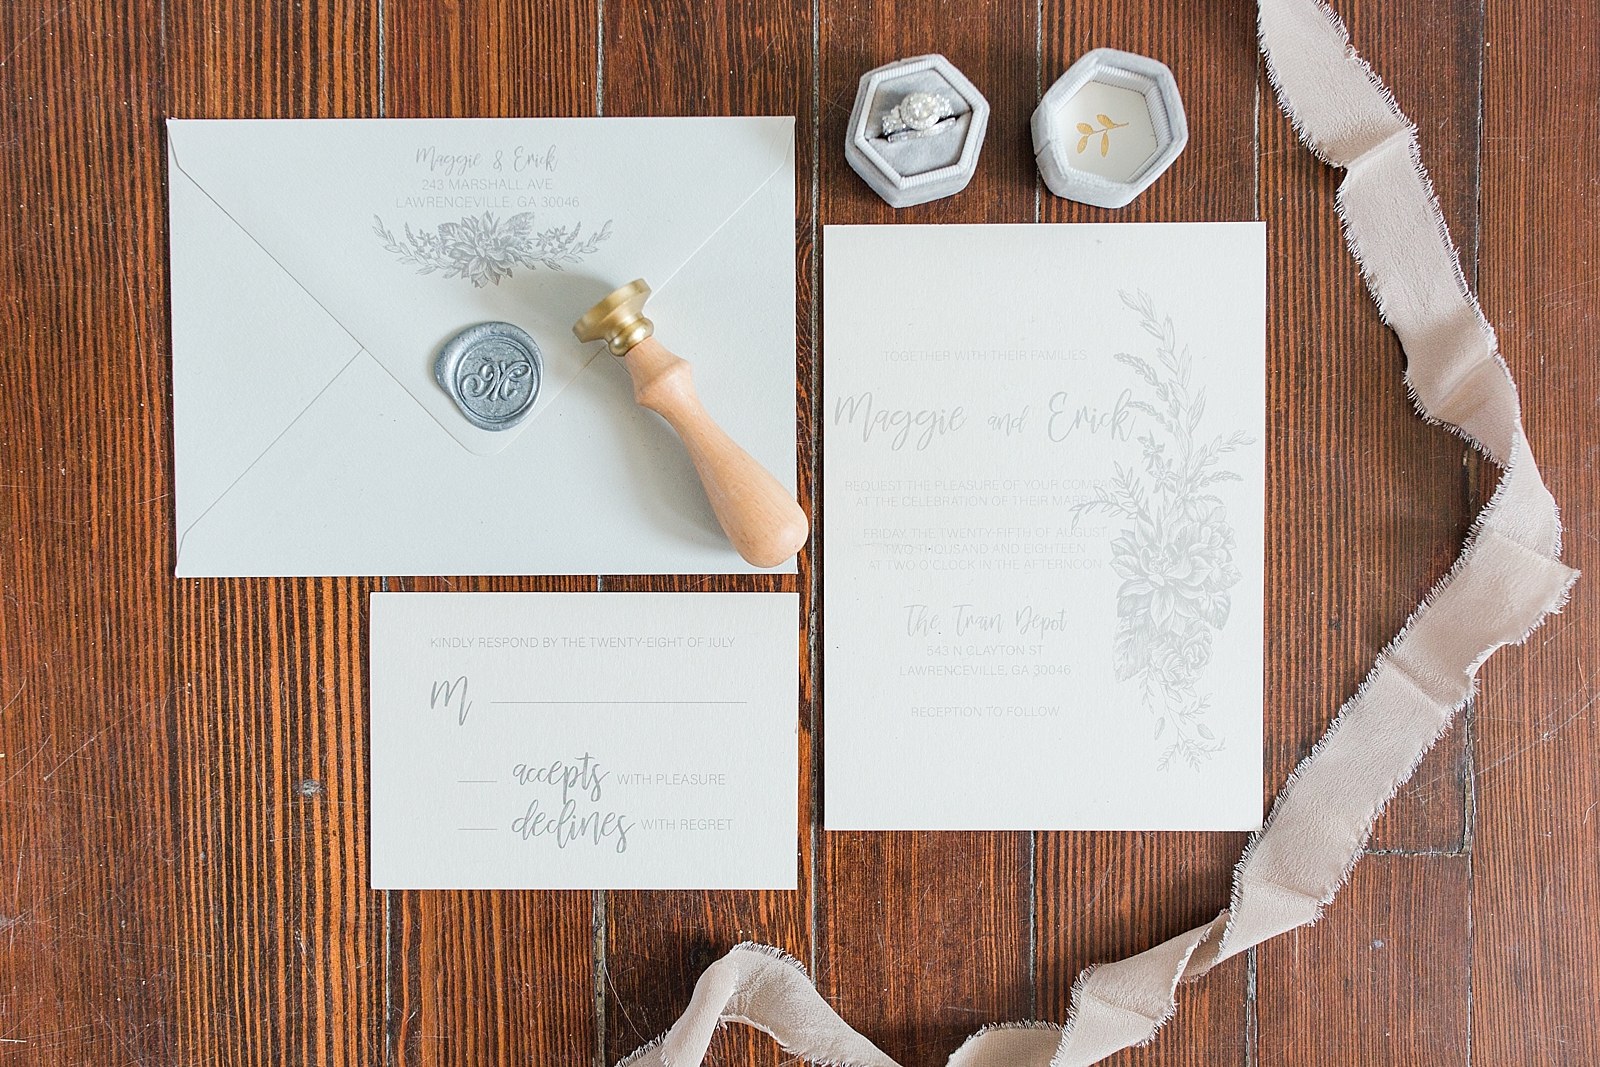 Atlanta Georgia Wedding invitation suite on wood floor with wax stamp and wedding ring Photo